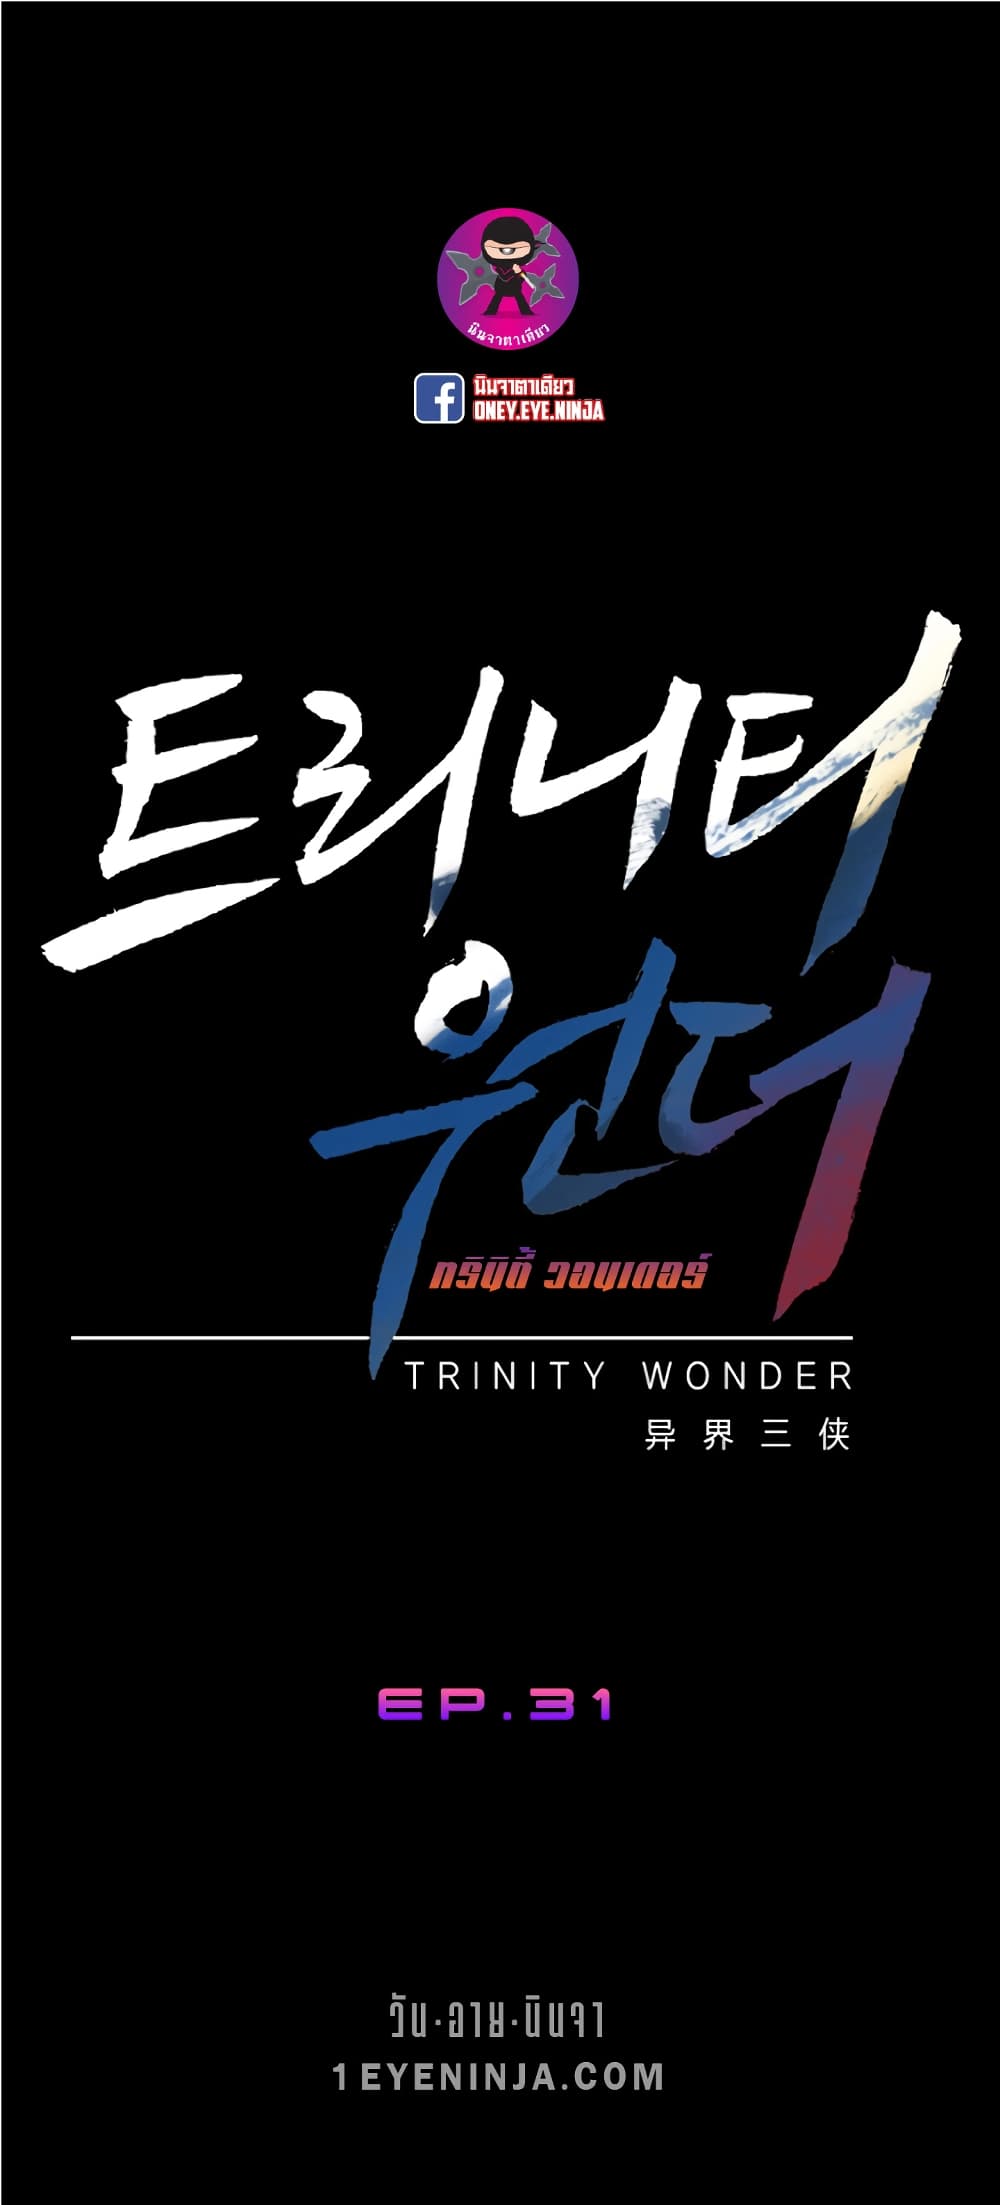 Trinity Wonder 31-31